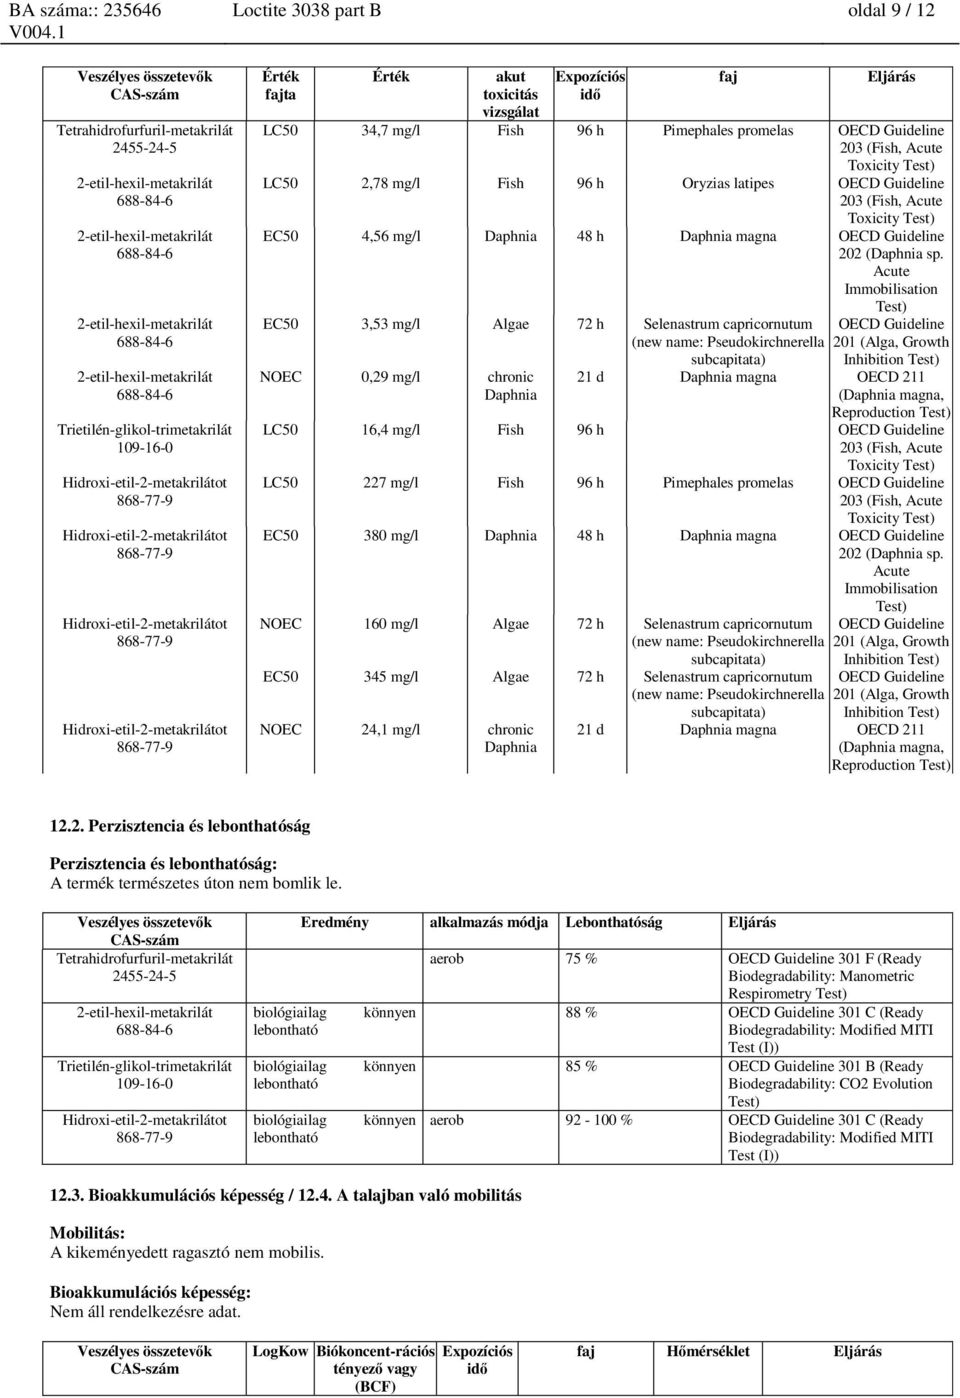 sp. Acute Immobilisation Test) EC50 3,53 mg/l Algae 72 h Selenastrum capricornutum (new name: Pseudokirchnerella subcapitata) NOEC 0,29 mg/l chronic Daphnia OECD Guideline 201 (Alga, Growth